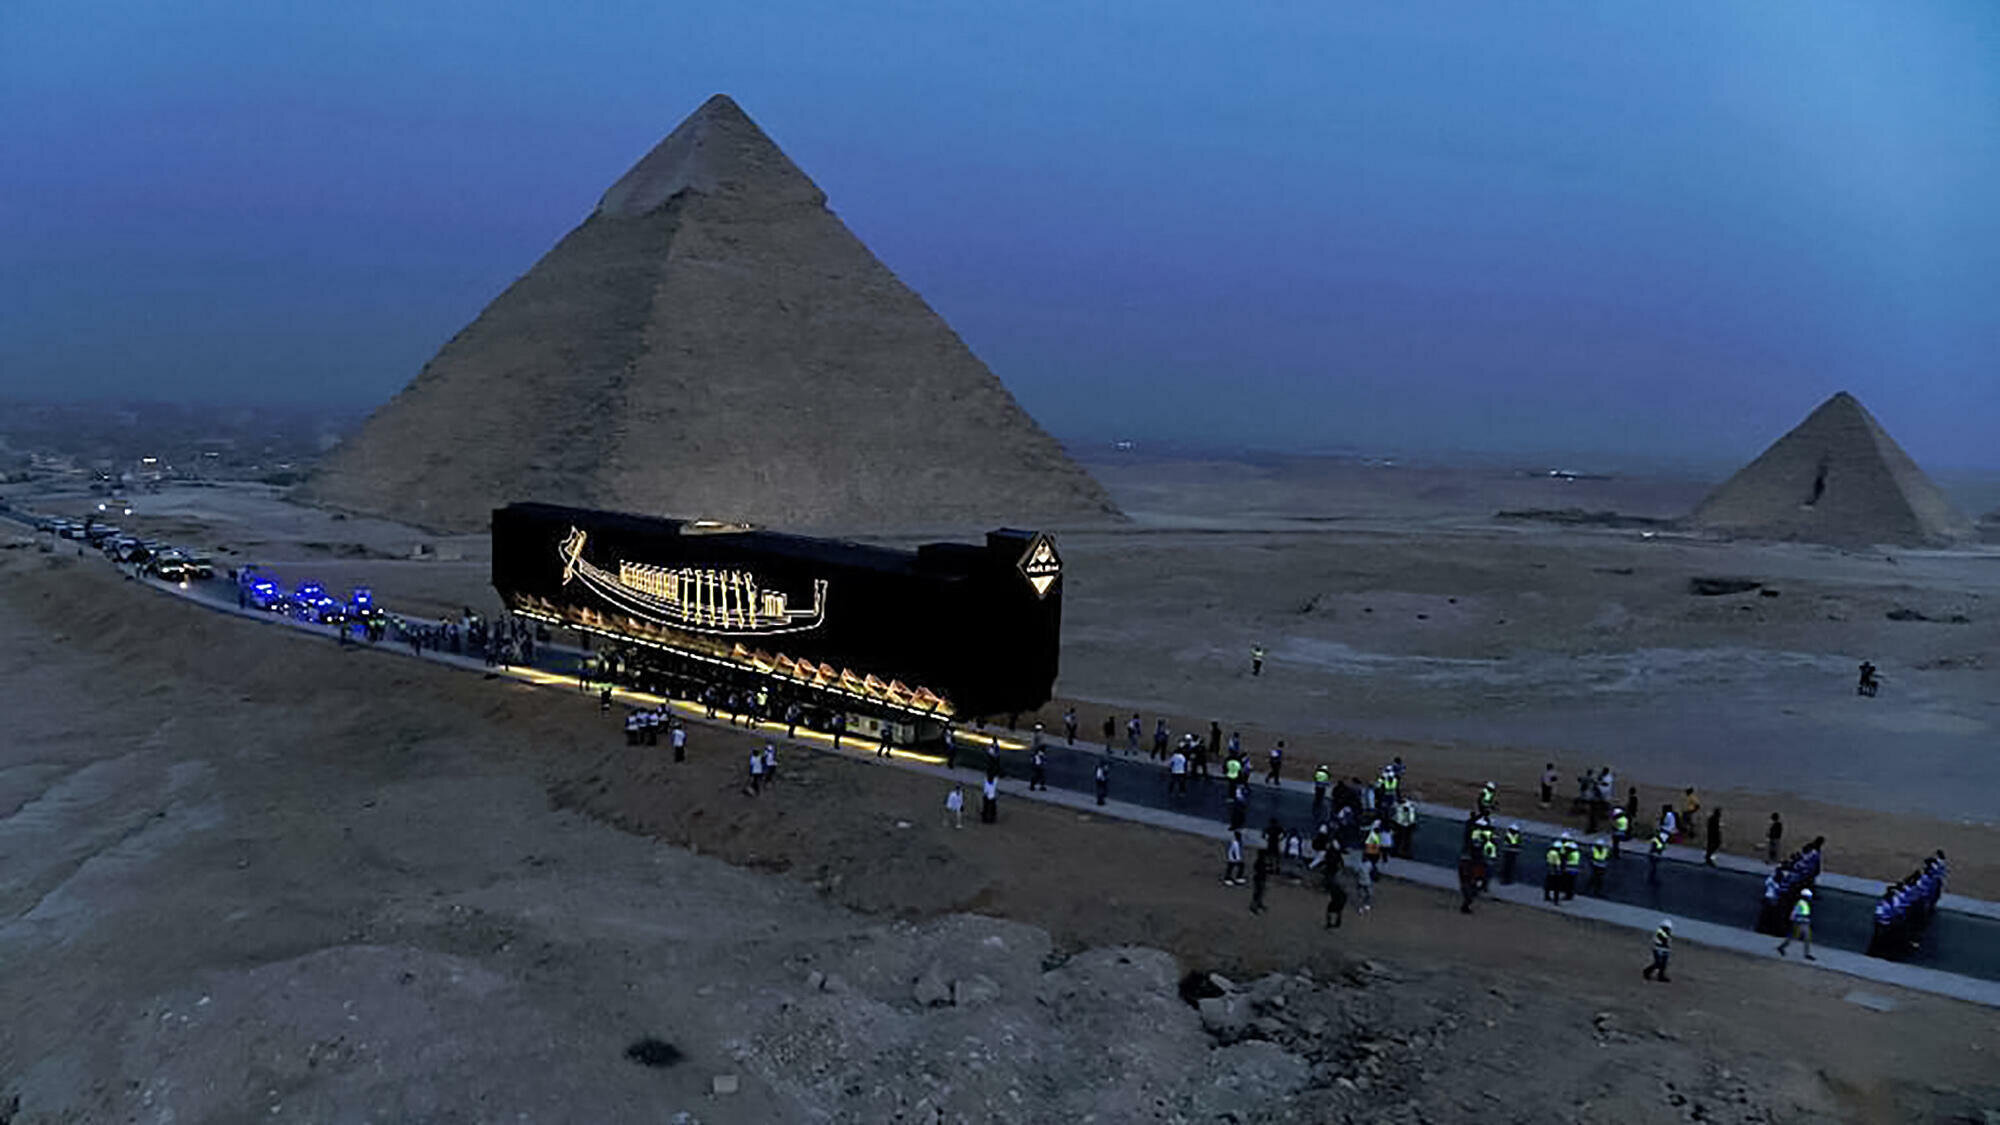 More information about "Αίγυπτος: Μεταφέρθηκε το Πλοίο του Χέοπα στο νέο Αρχαιολογικό Μουσείο"